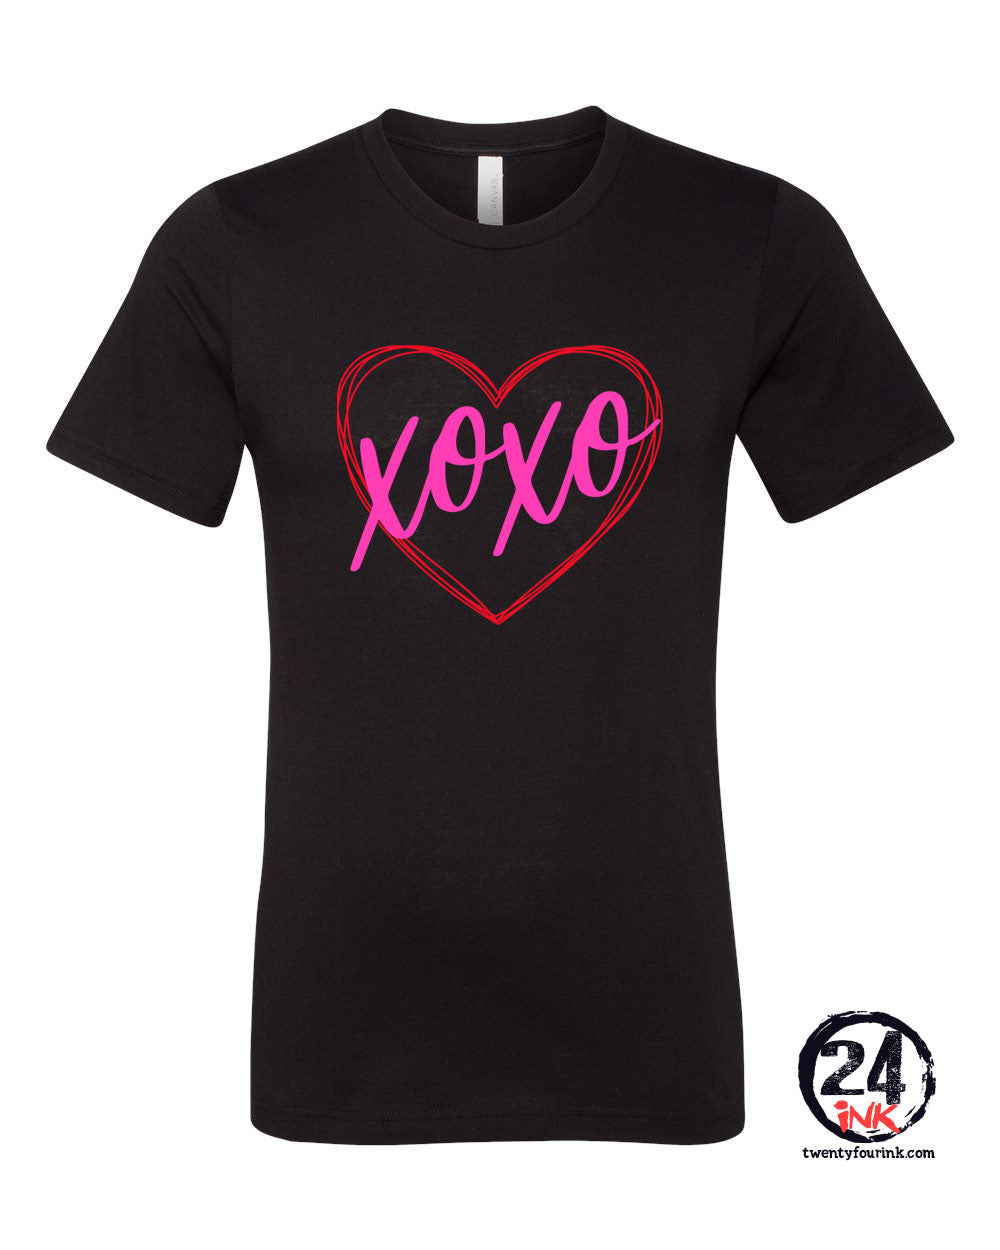 XOXO Heart Valentine T-Shirt